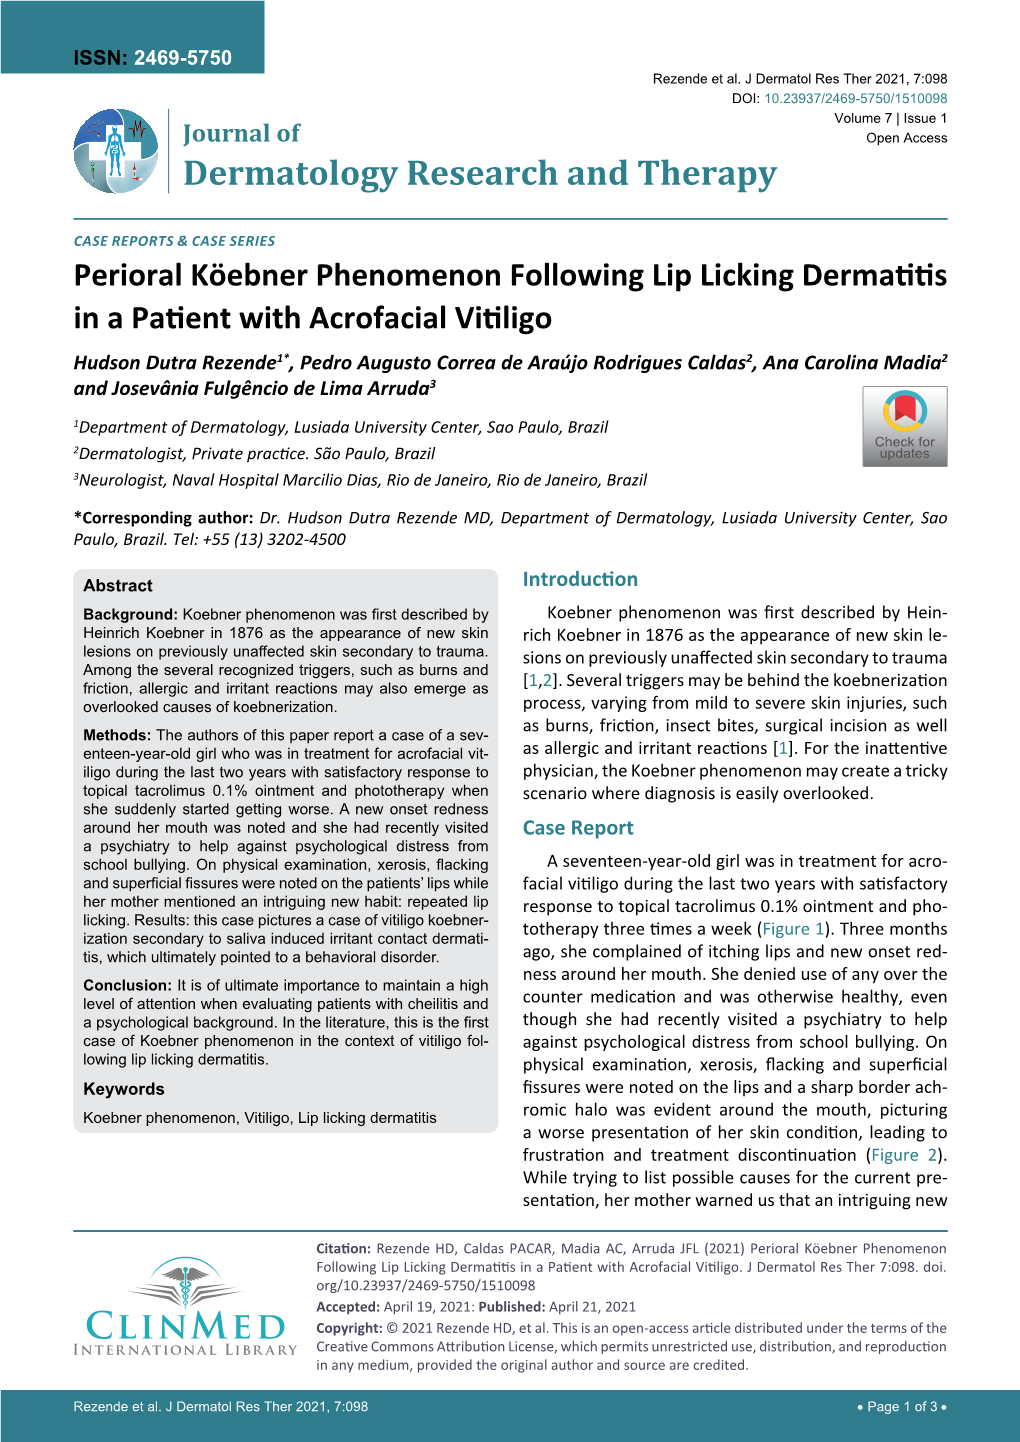 Perioral Köebner Phenomenon Following Lip Licking Dermatitis In